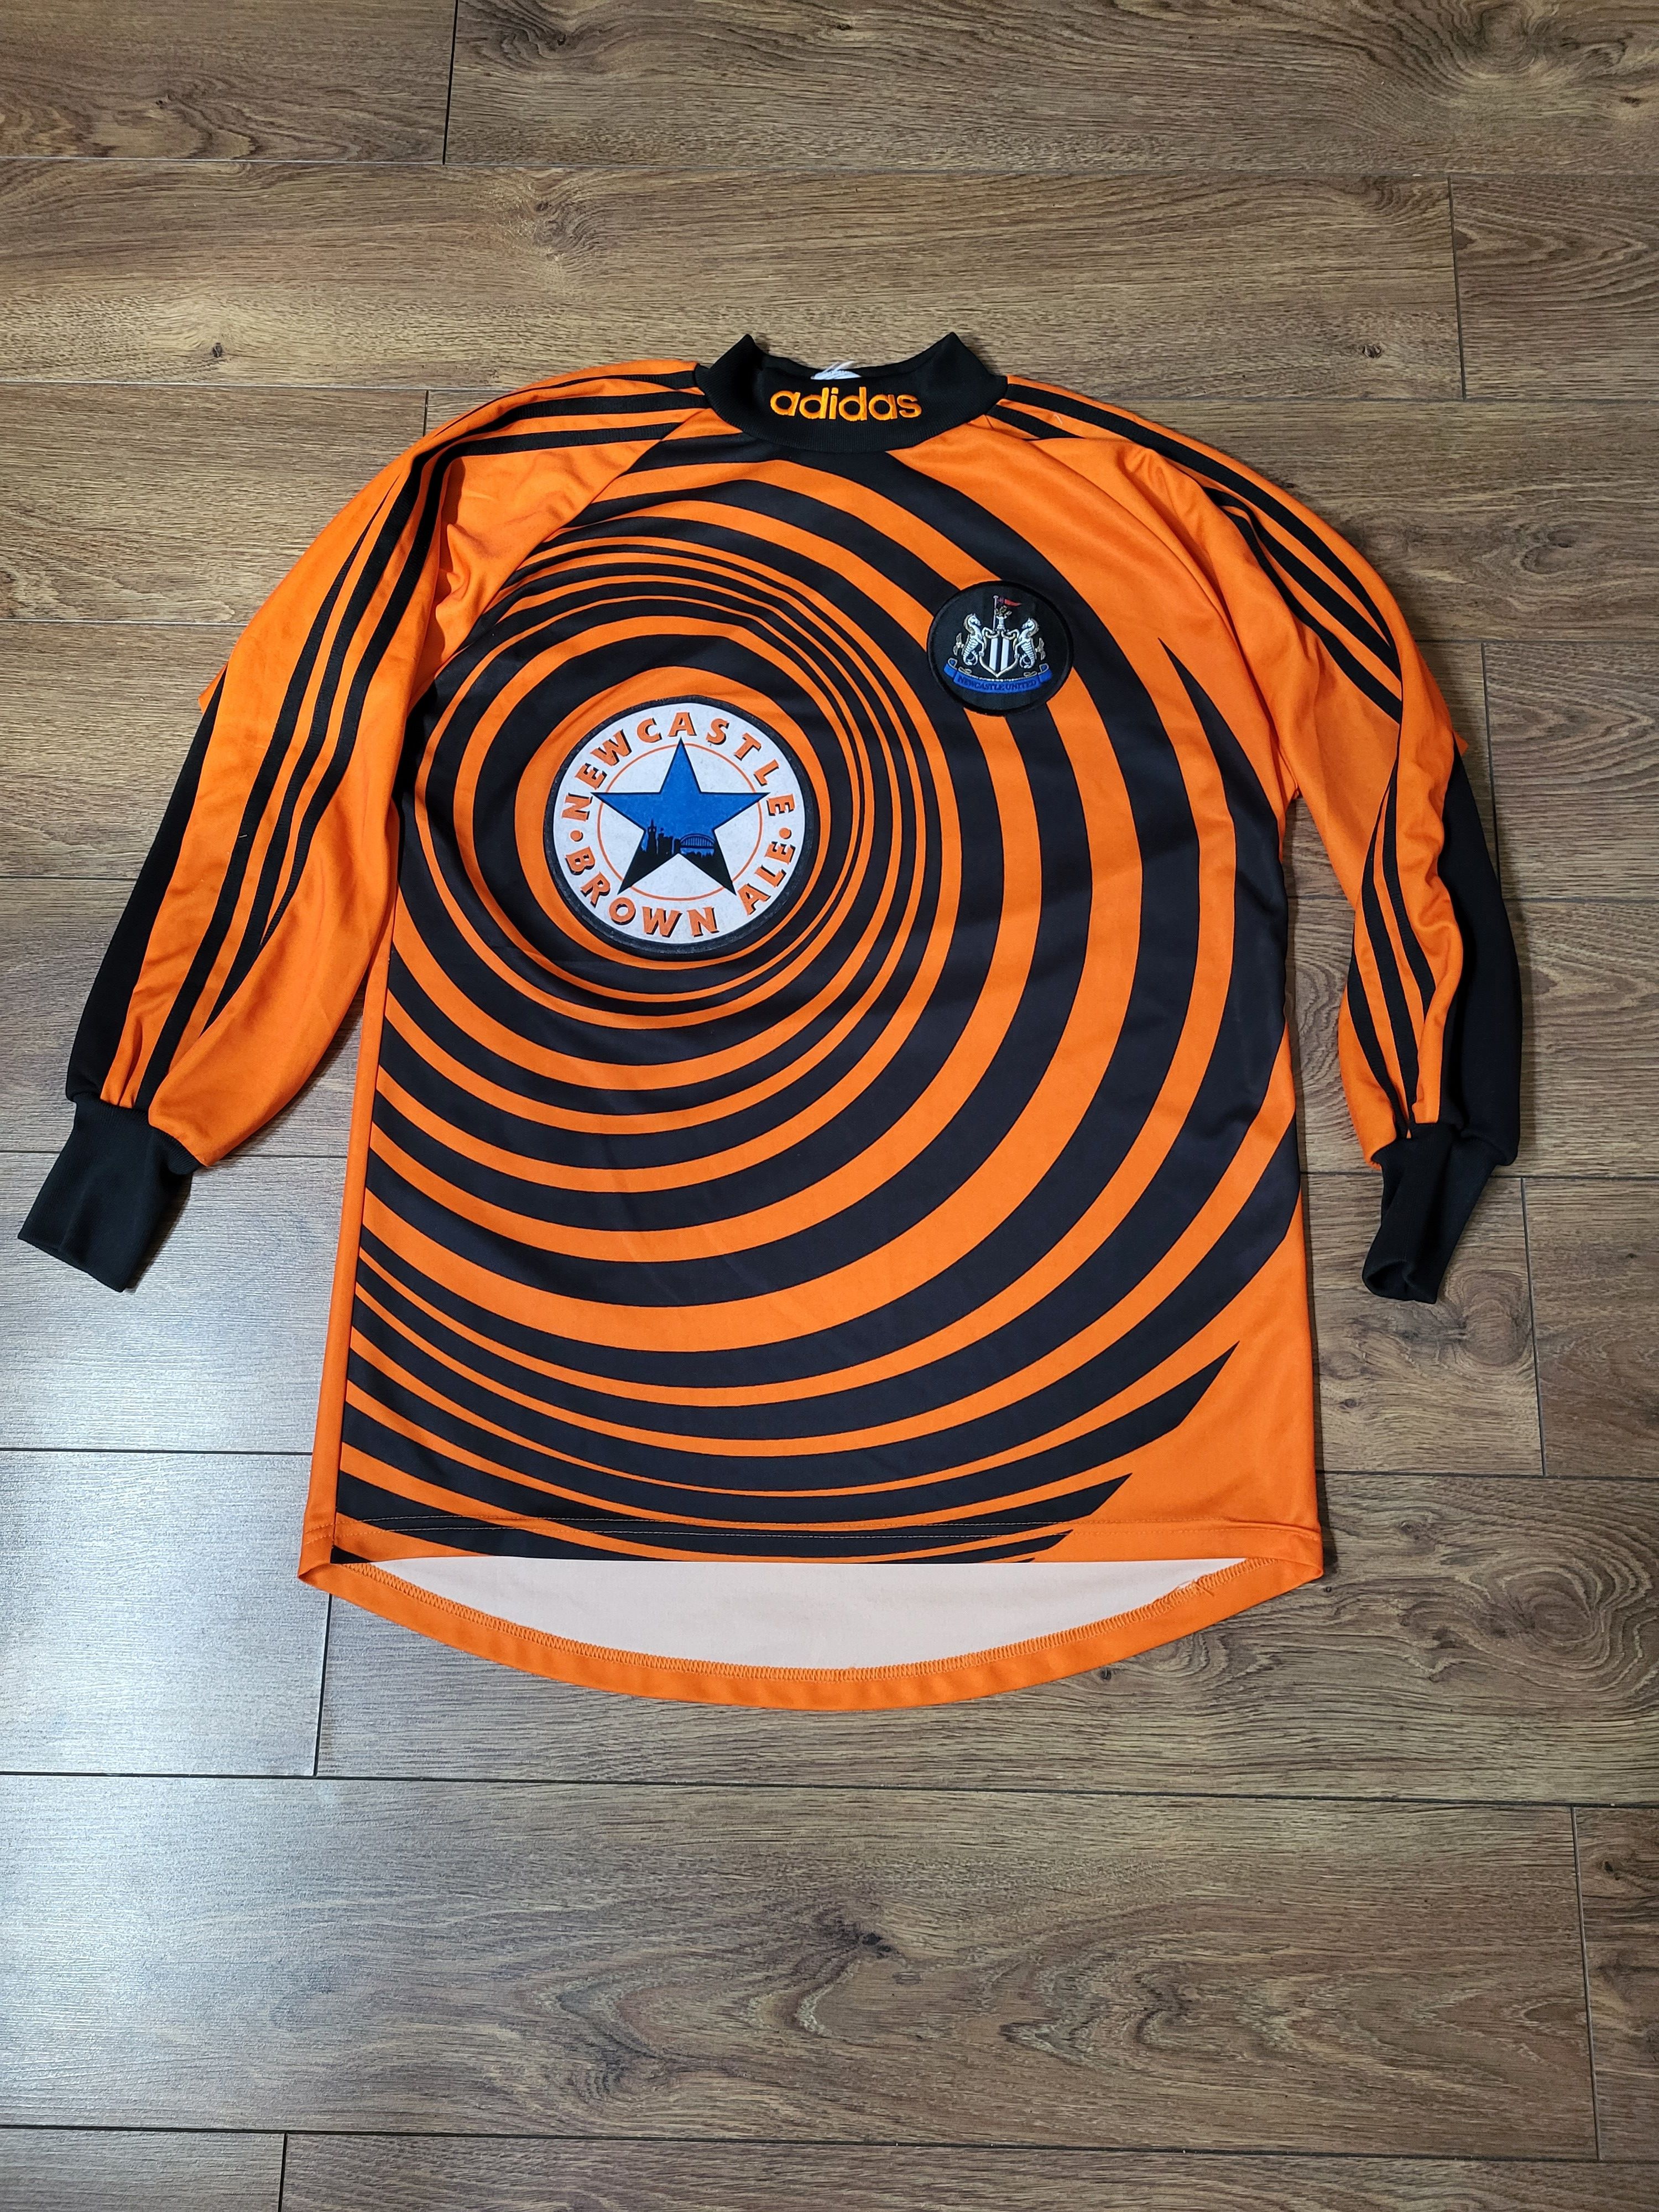 Adidas Newcastle United Goalkeeper football shirt 97-98 Adidas Size US S / EU 44-46 / 1 - 1 Preview